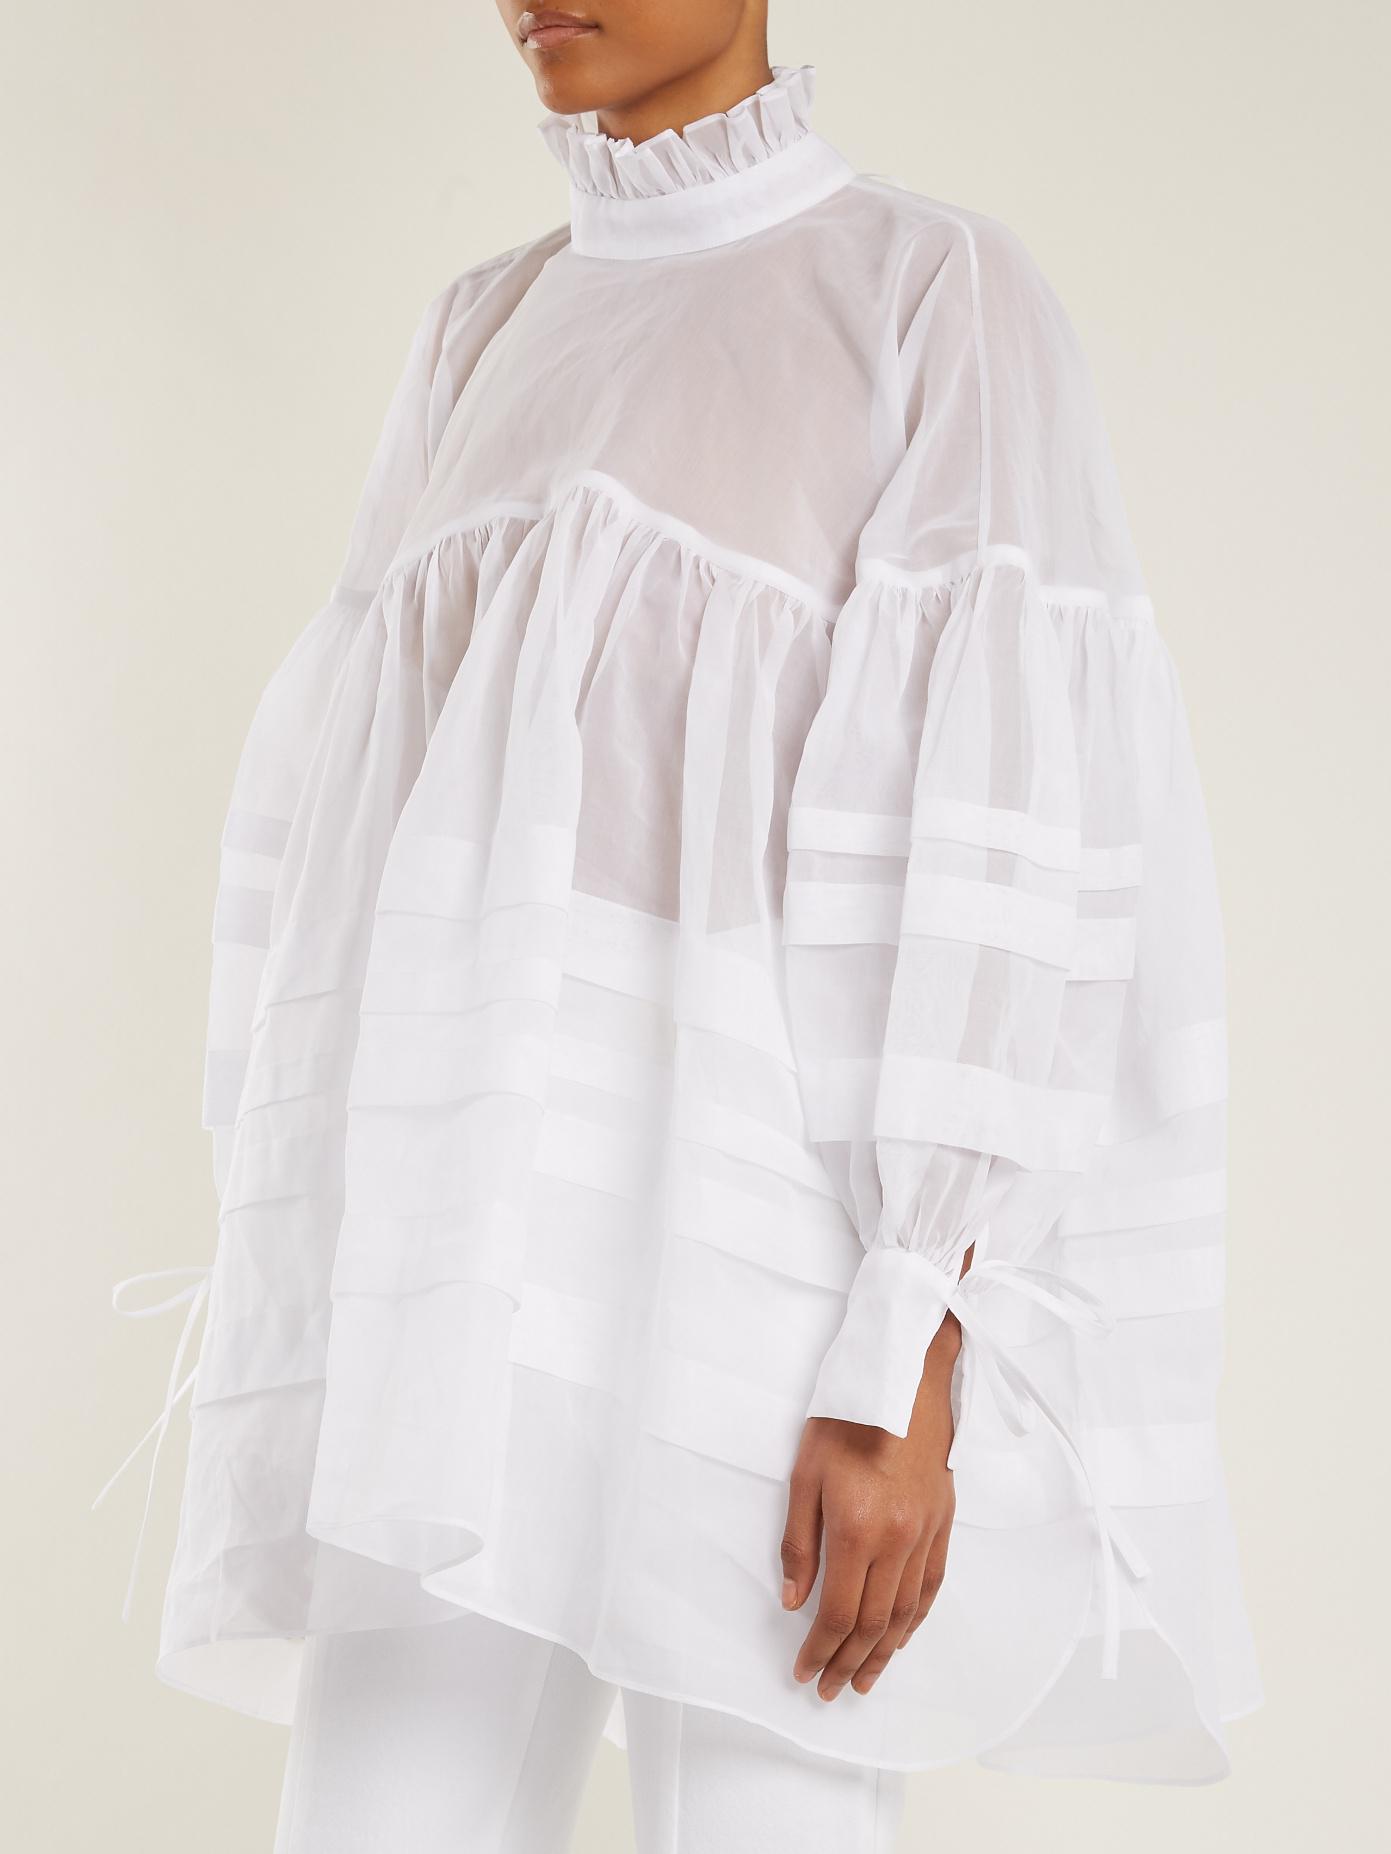 Cecilie Bahnsen Alberte Oversized Cotton Top in White - Lyst